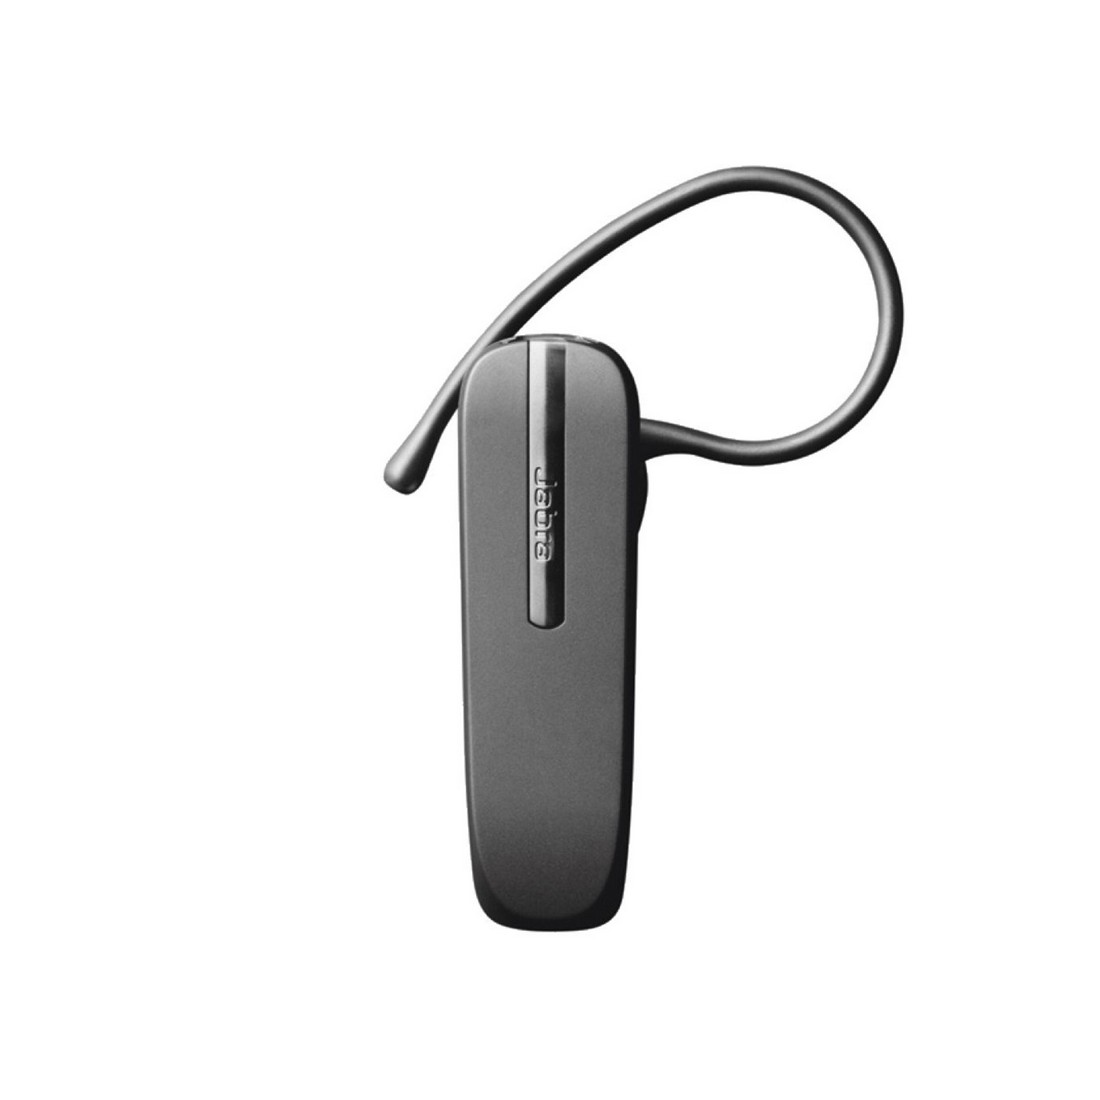 картинка Bluetooth-гарнитура Jabra BT2046 Чёрный от магазина itmag.kz